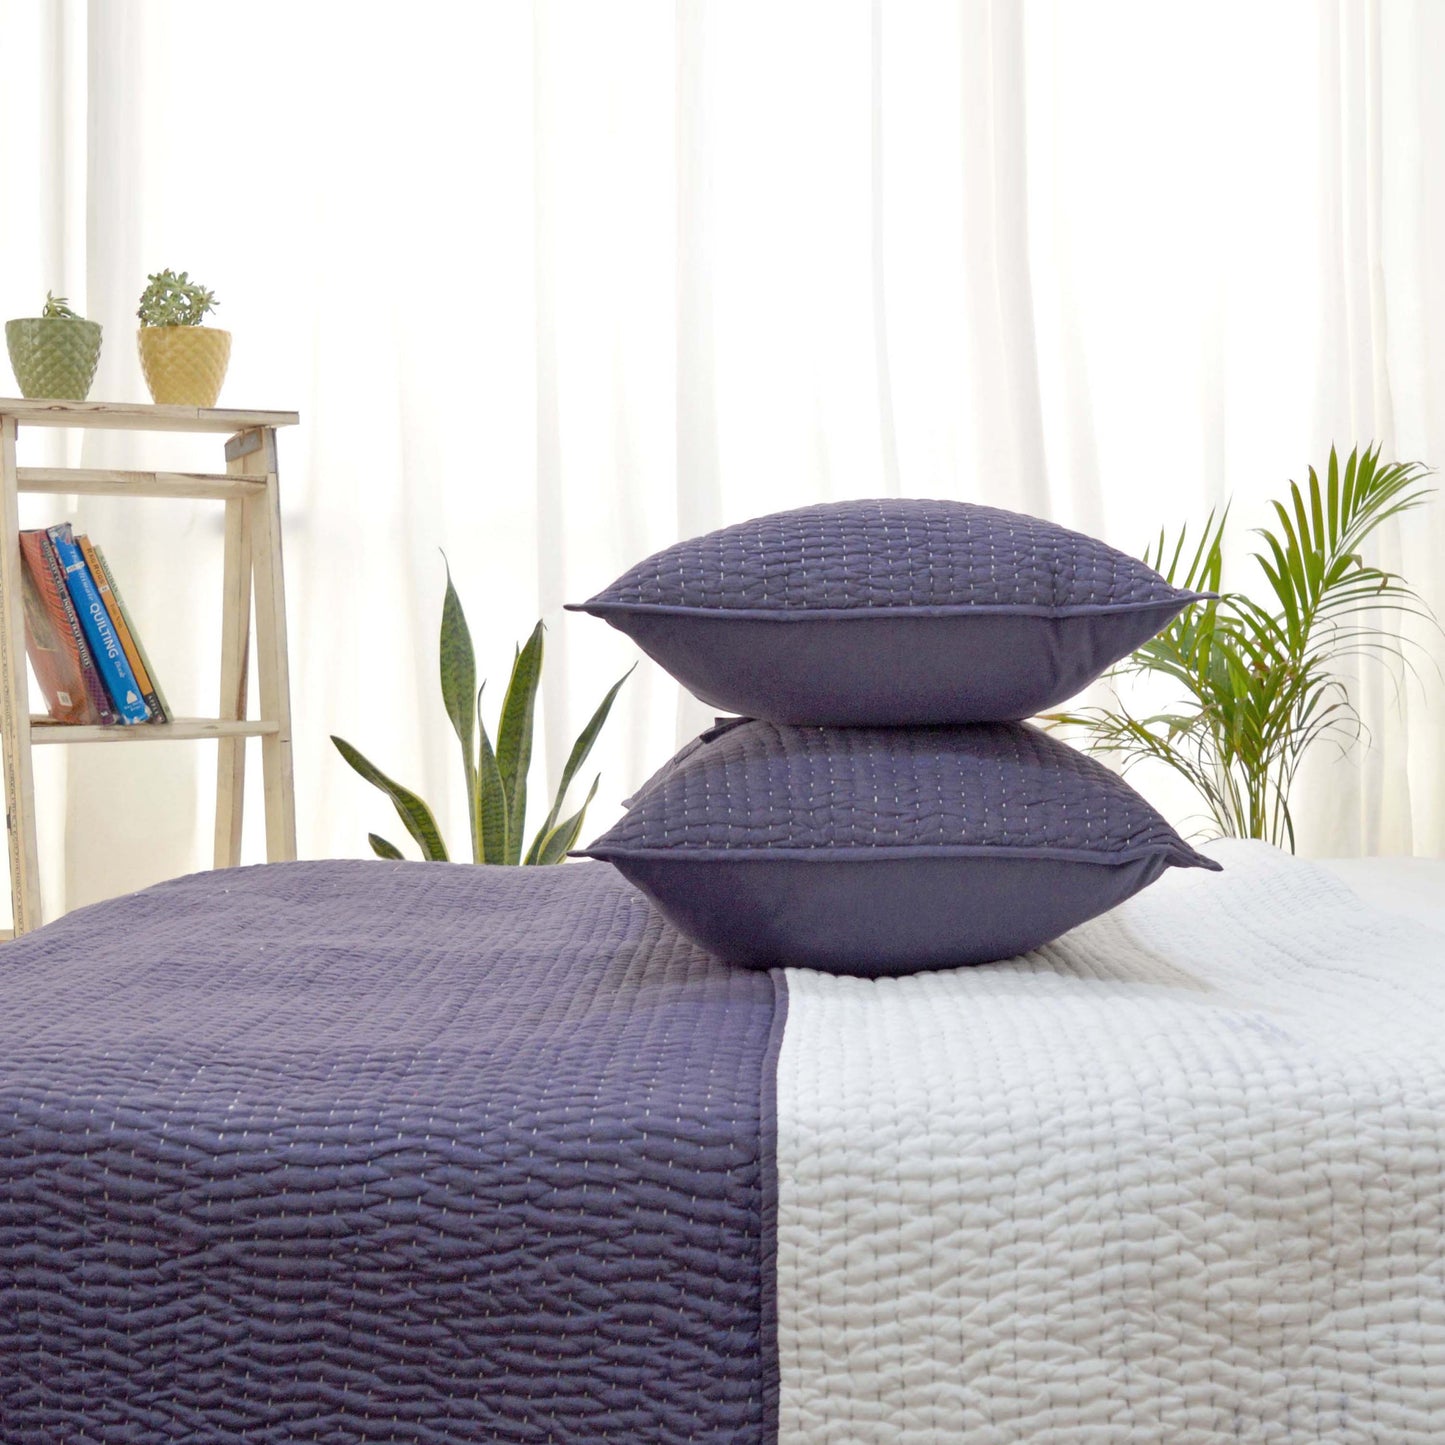 LAVENDER Kantha quilt - stripe pattern quilting - Quilt set / Quilt / Pillow case available